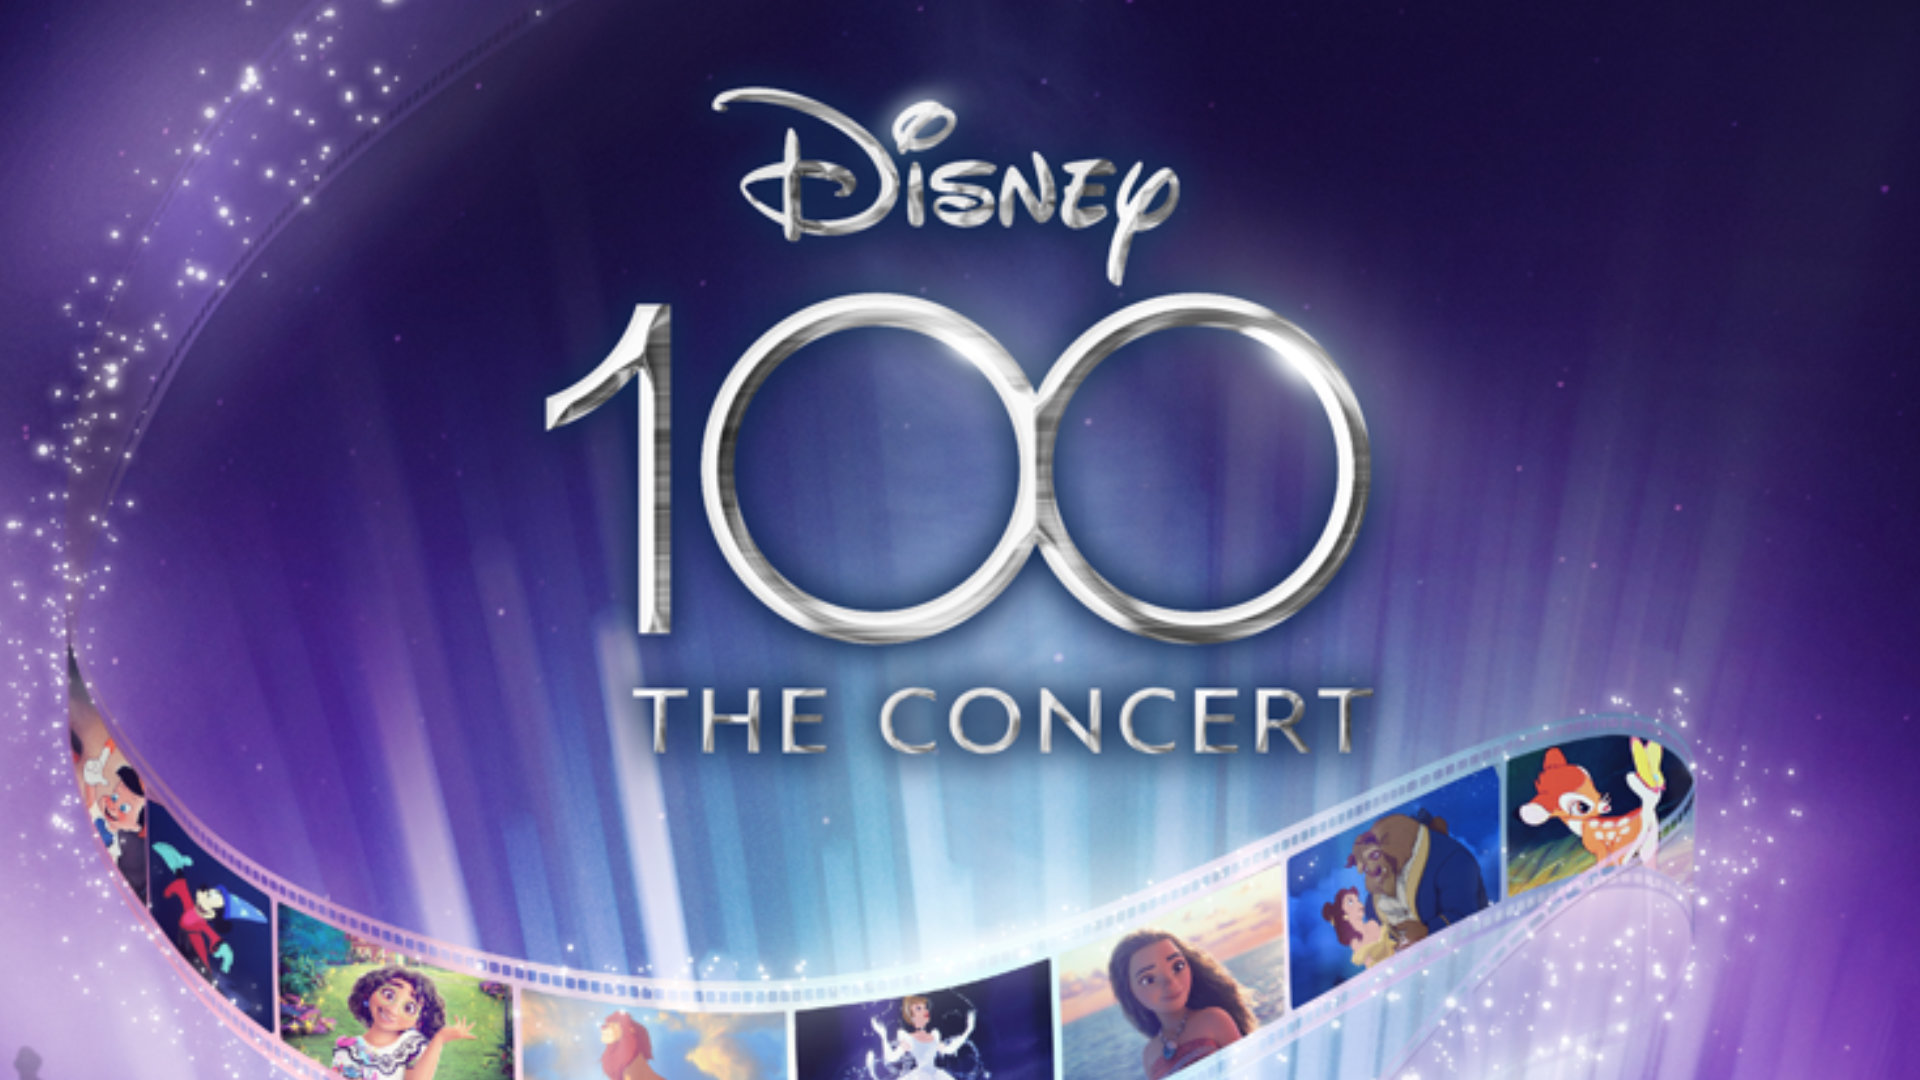 Disney 100 The Concert 2023 tour tickets, dates, venues and cast